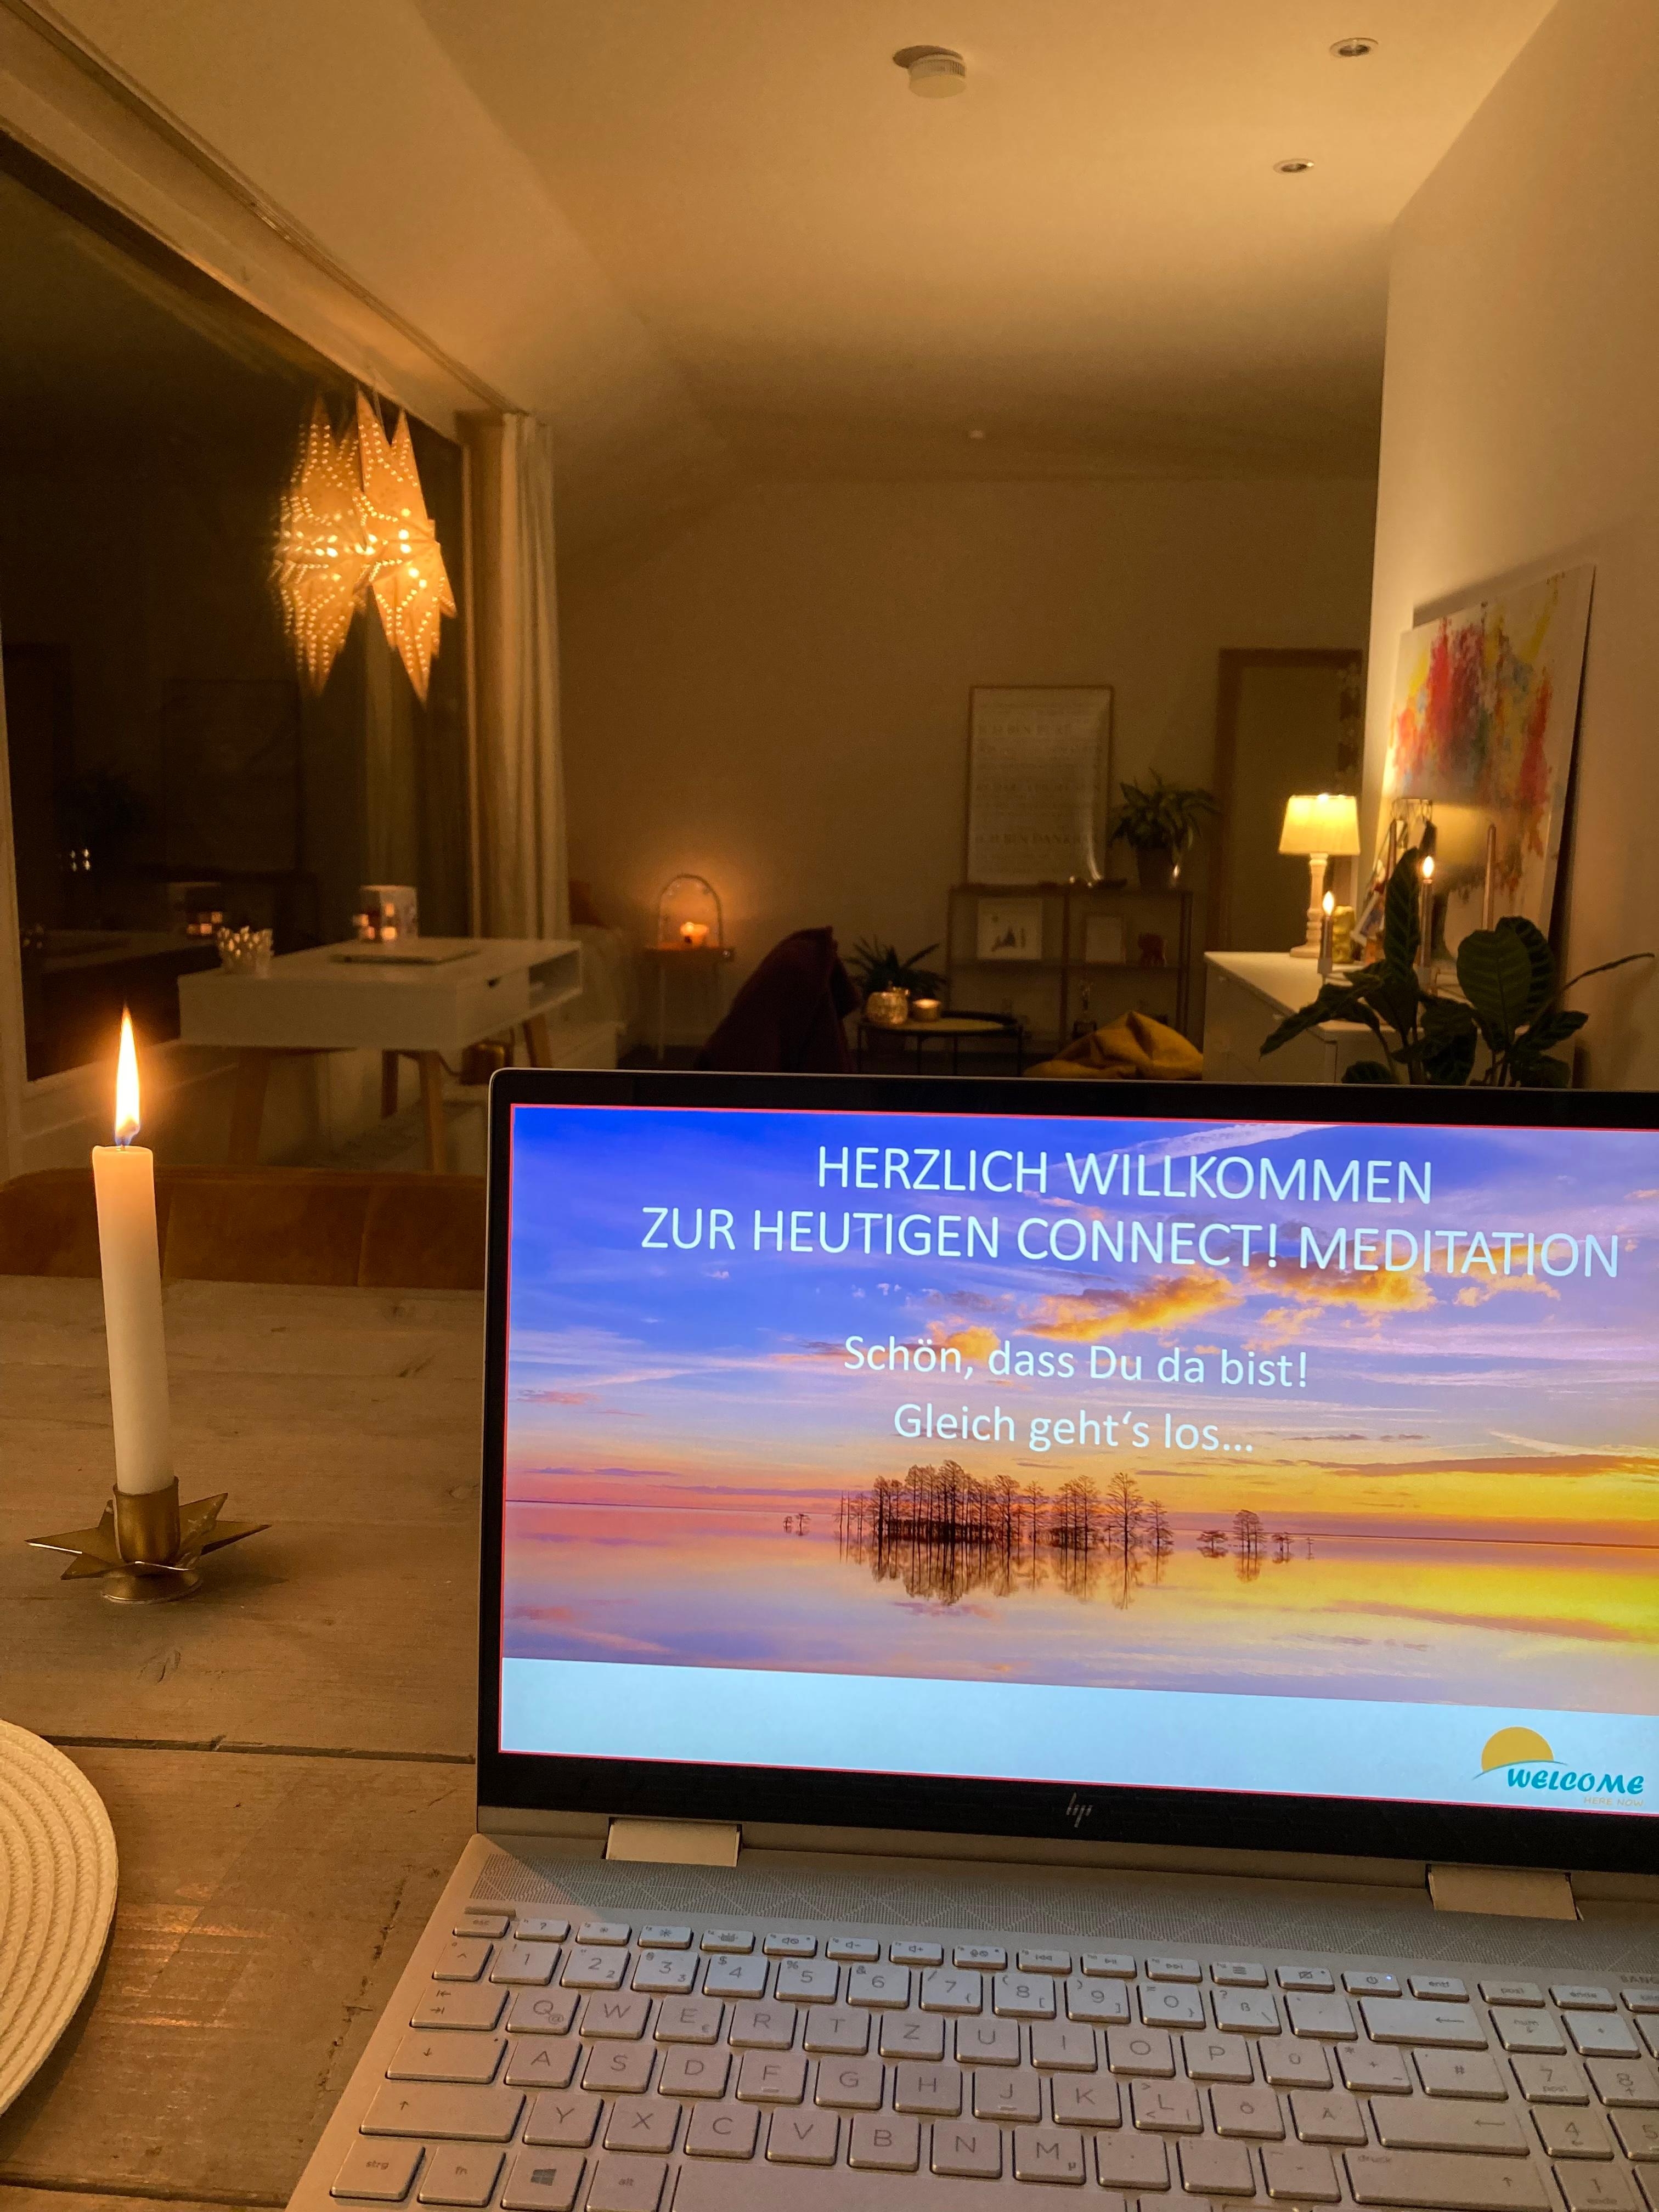 Gemeinsam meditieren | jeden Mittwoch kostenlos online 🧘‍♀️ 
👉🏻 www.welcome-here-now.de

#cozyhome #welcomeherenow 